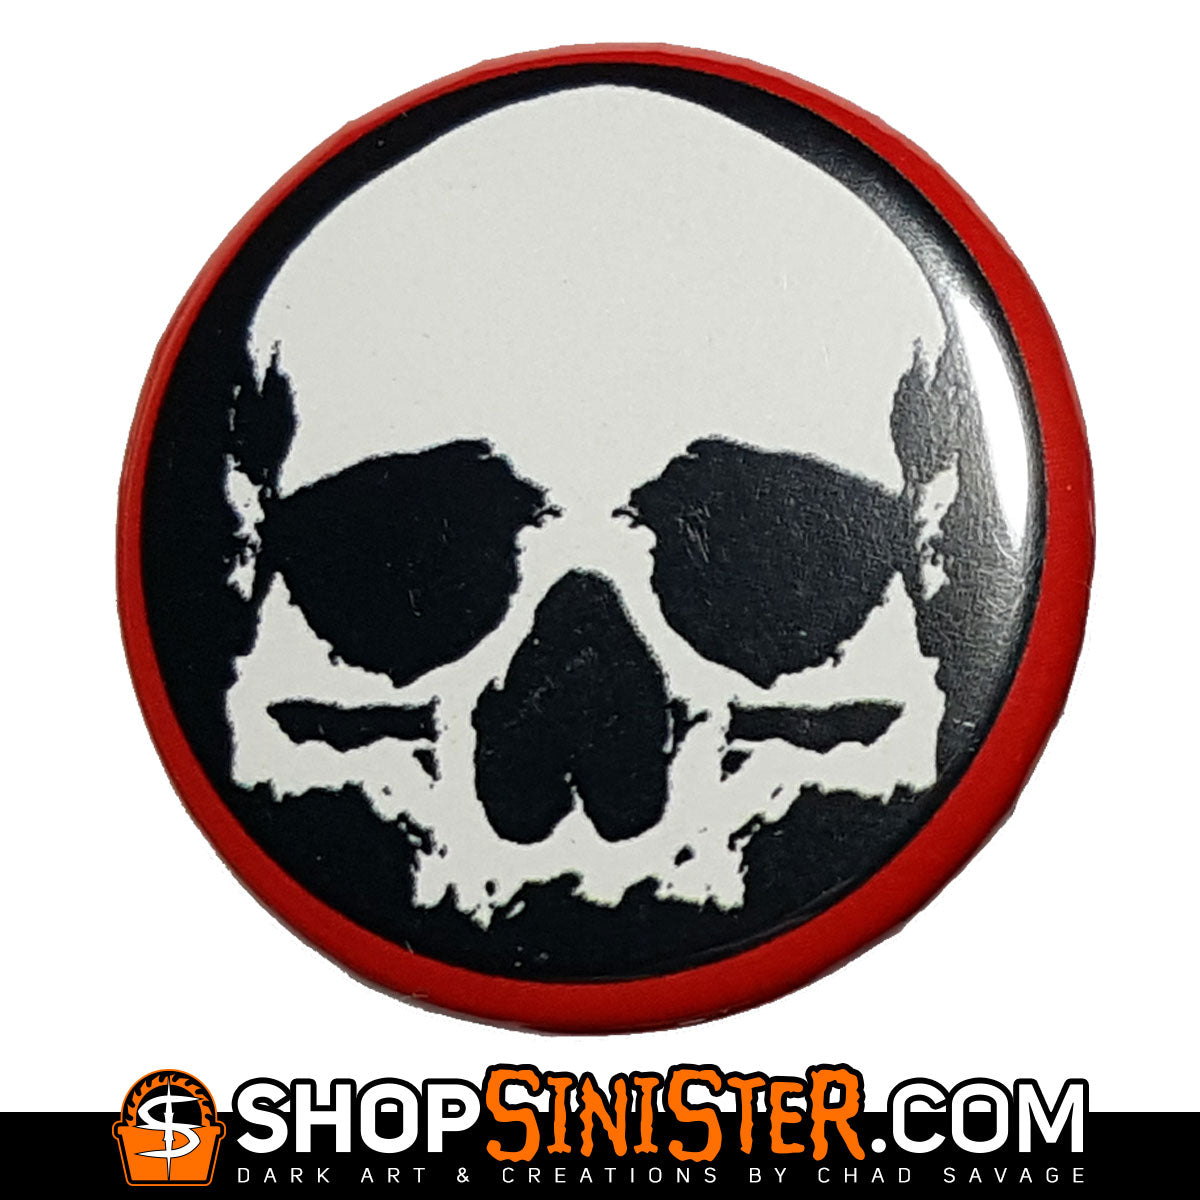  30 Pcs Mini Skull Buttons Skull Pant Button Skull